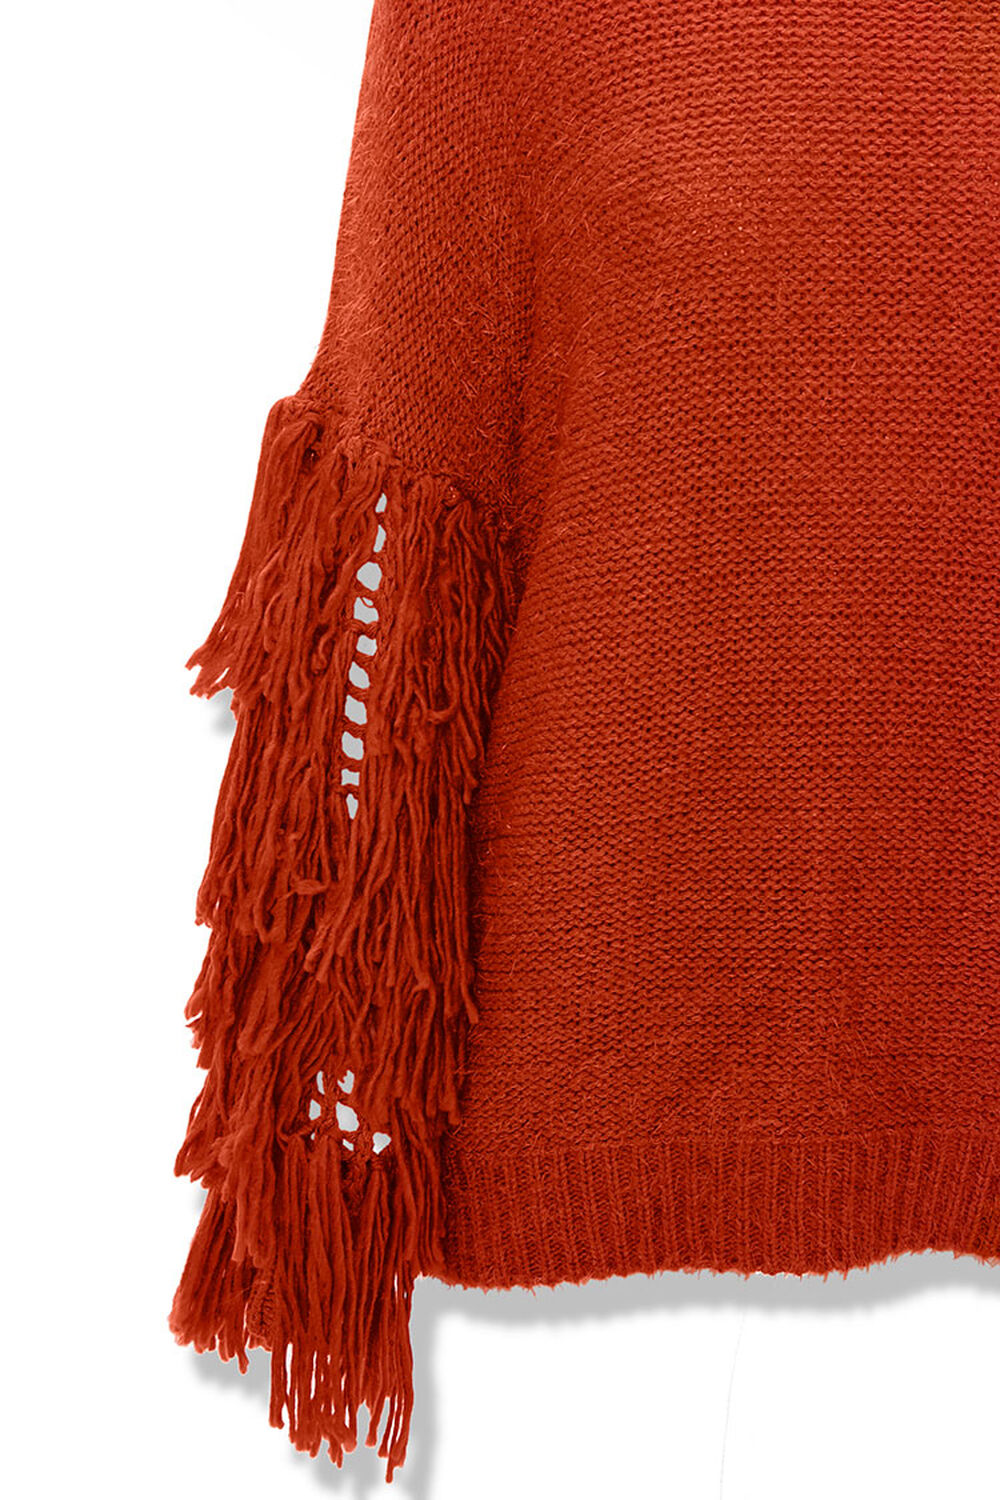 RUST Fringe-Trim Knit Sweater, image 3